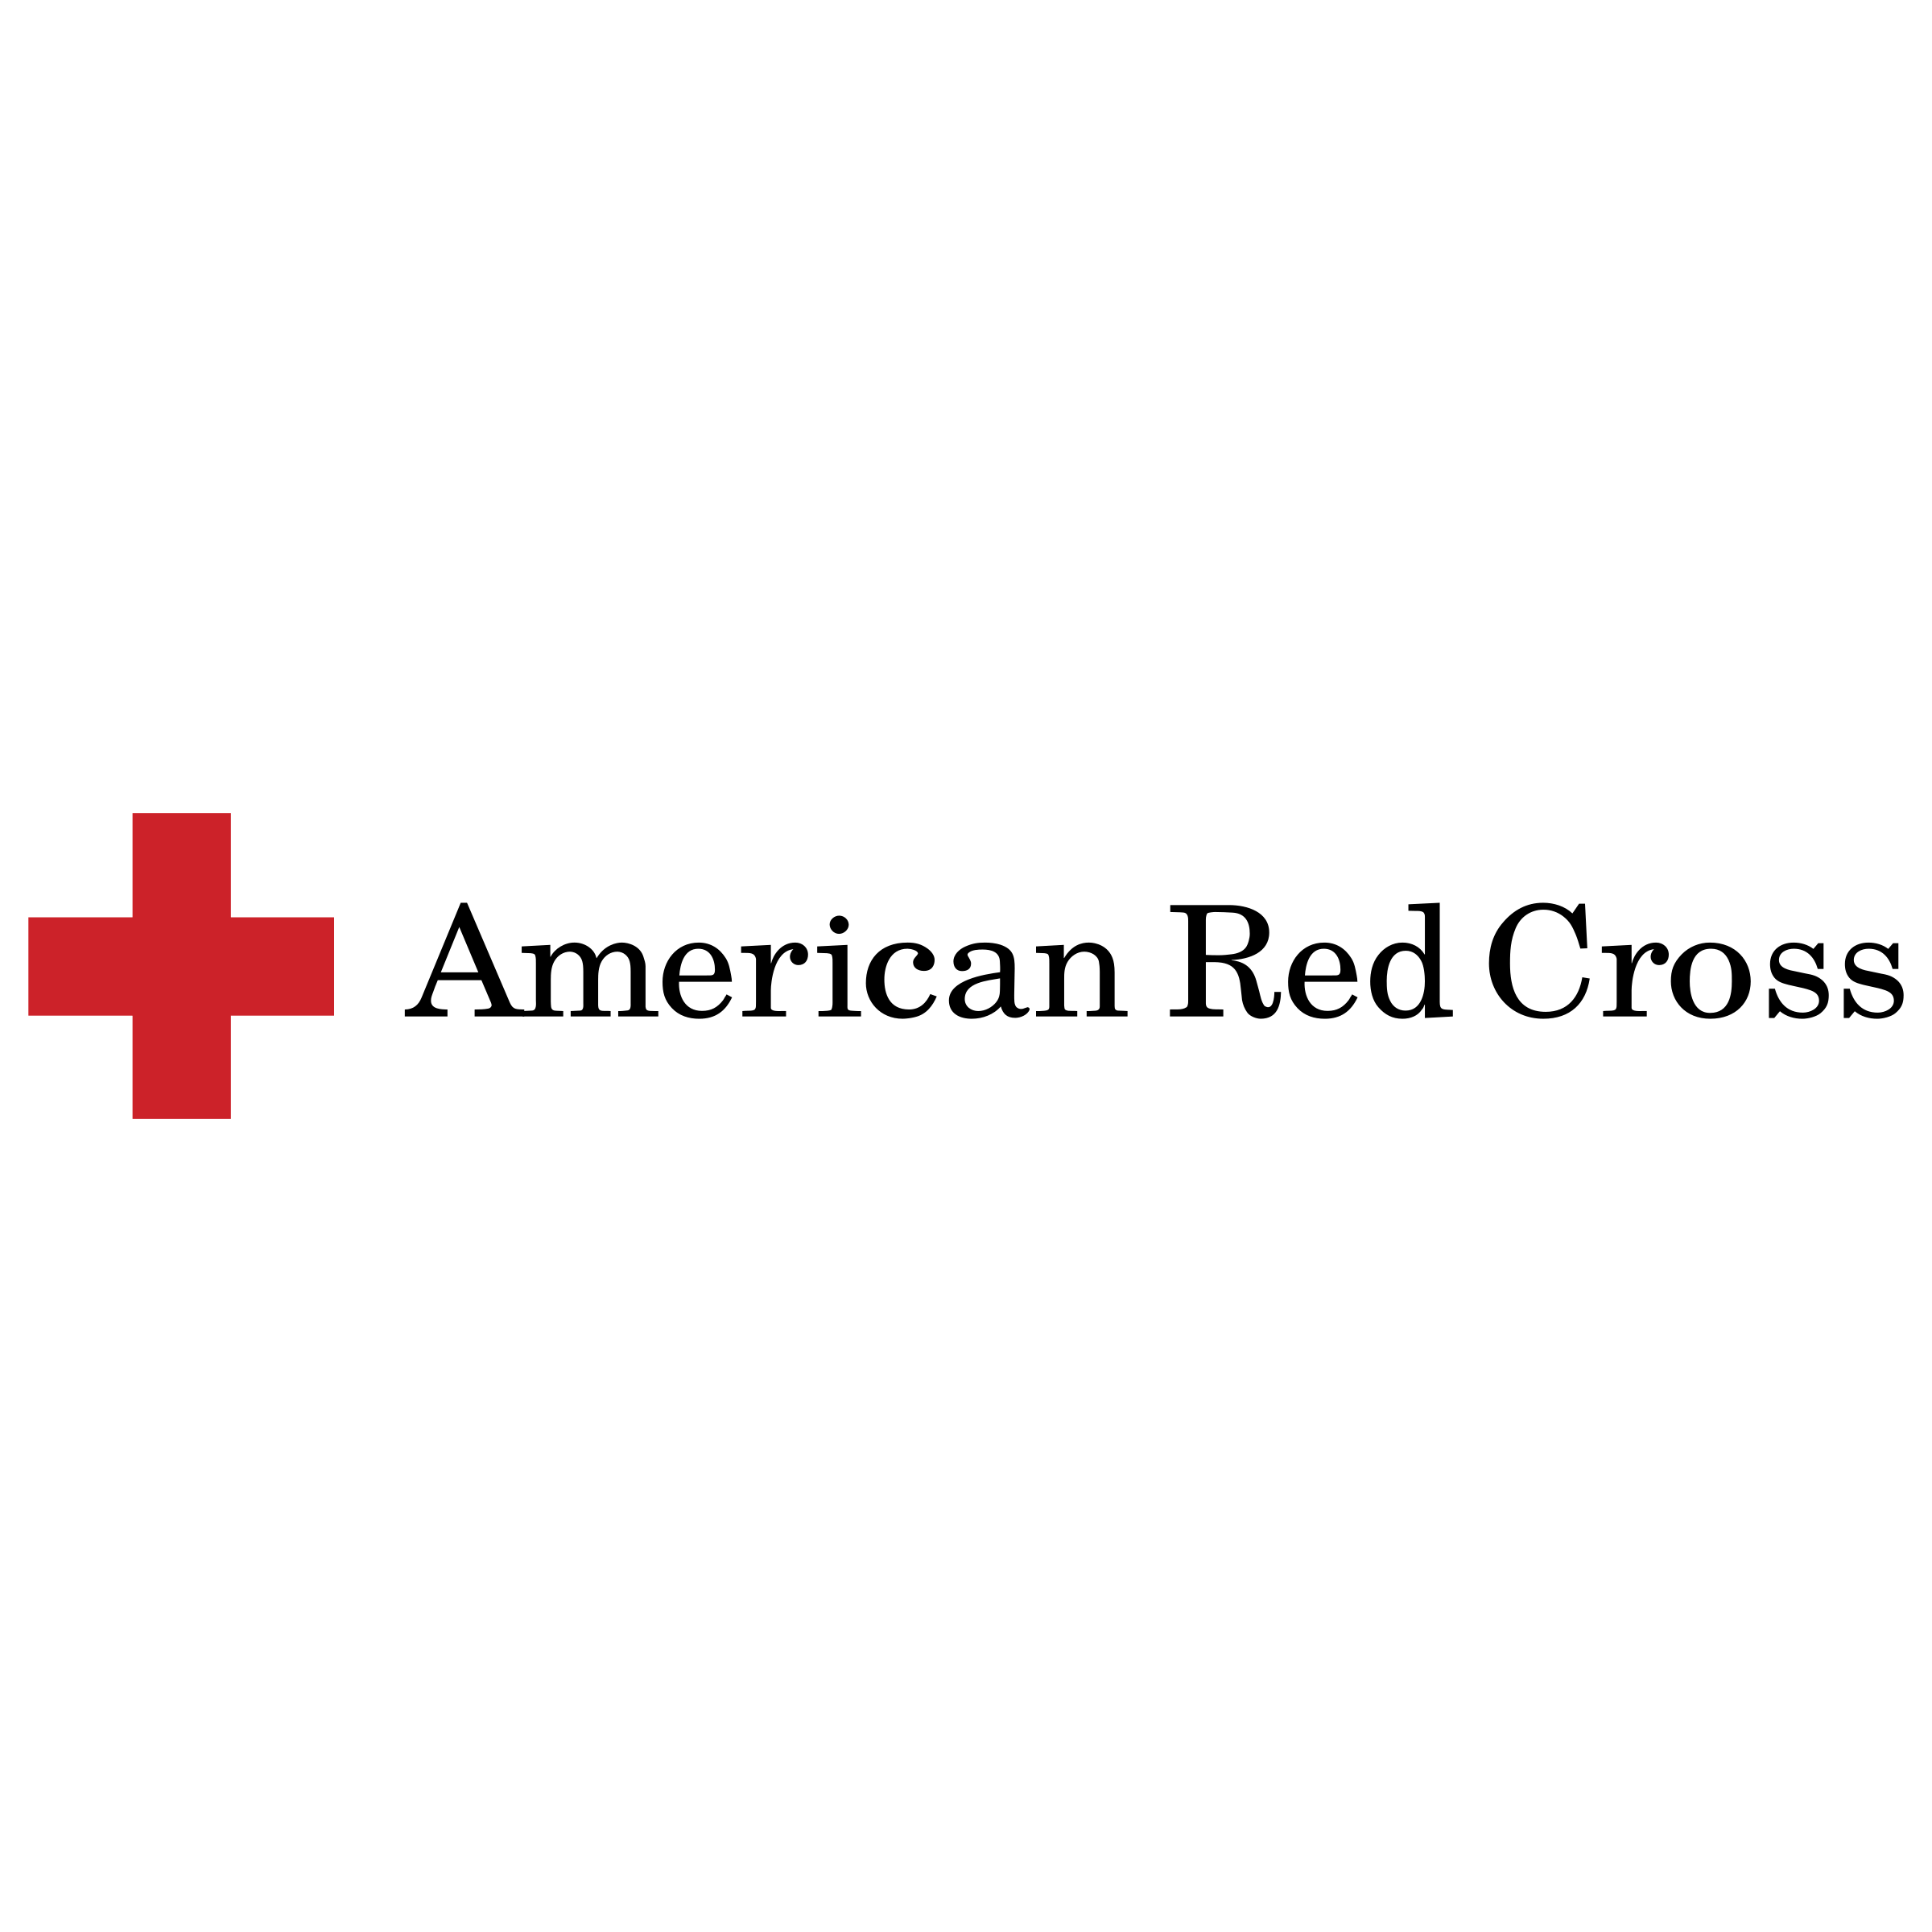 American Red Cross Logo - American Red Cross Logo PNG Transparent & SVG Vector - Freebie Supply